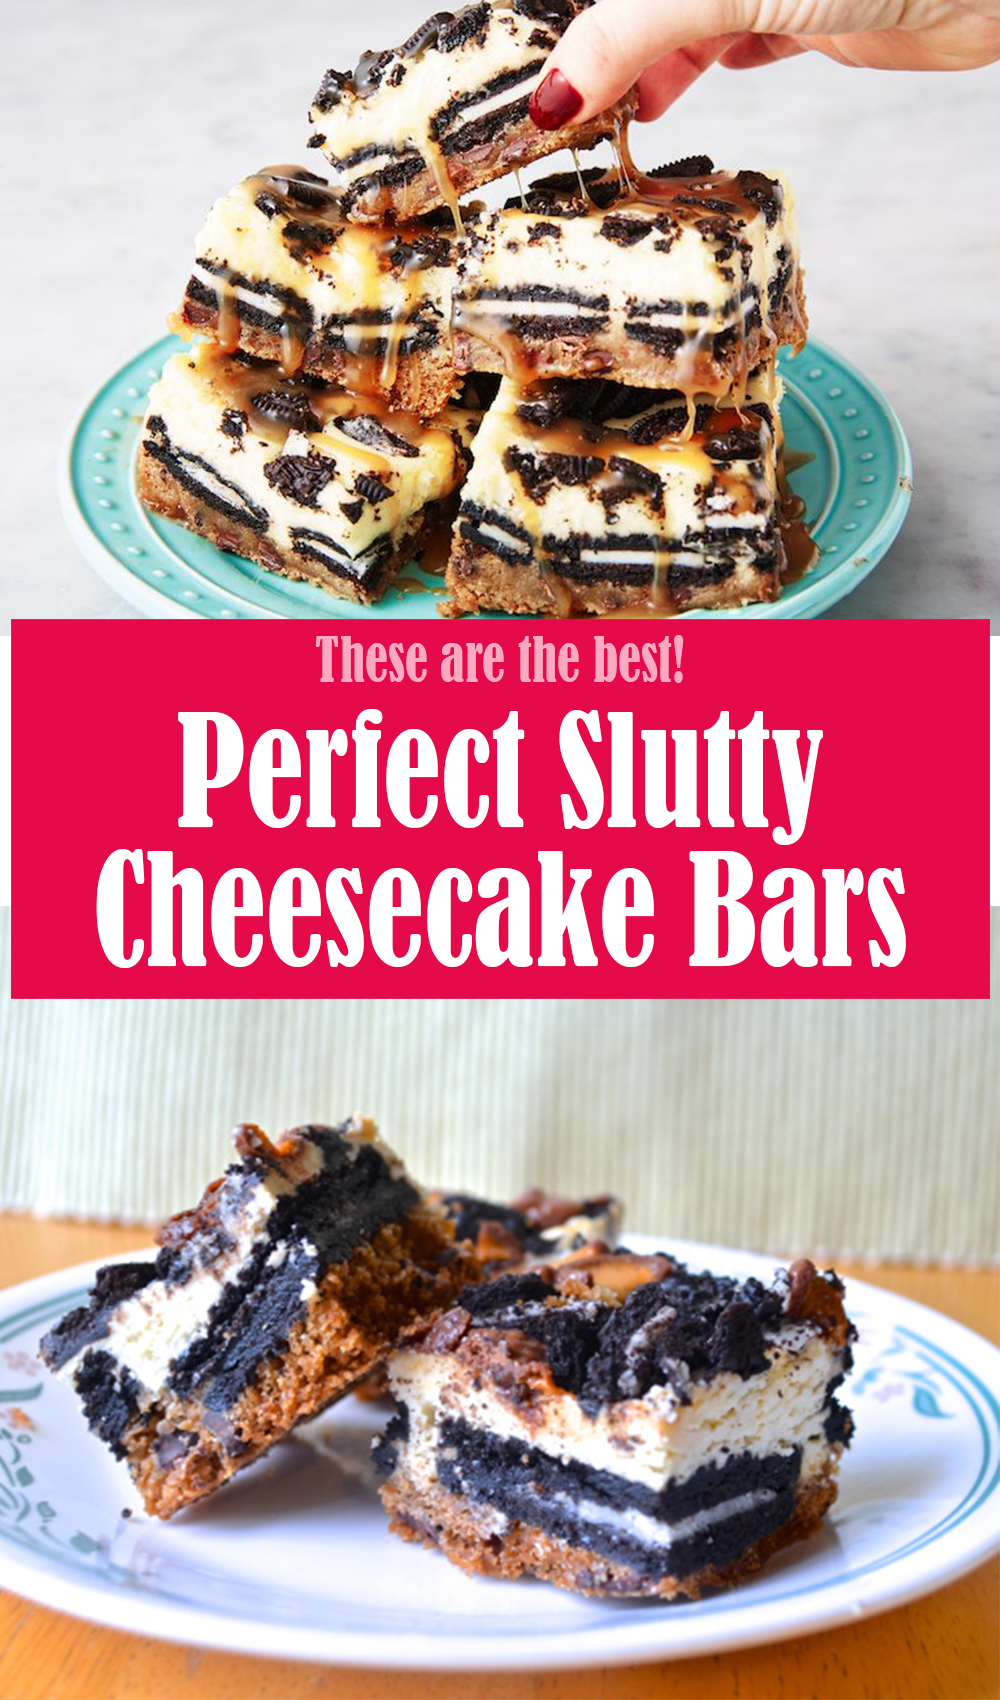 Perfect Slutty Cheesecake Bars